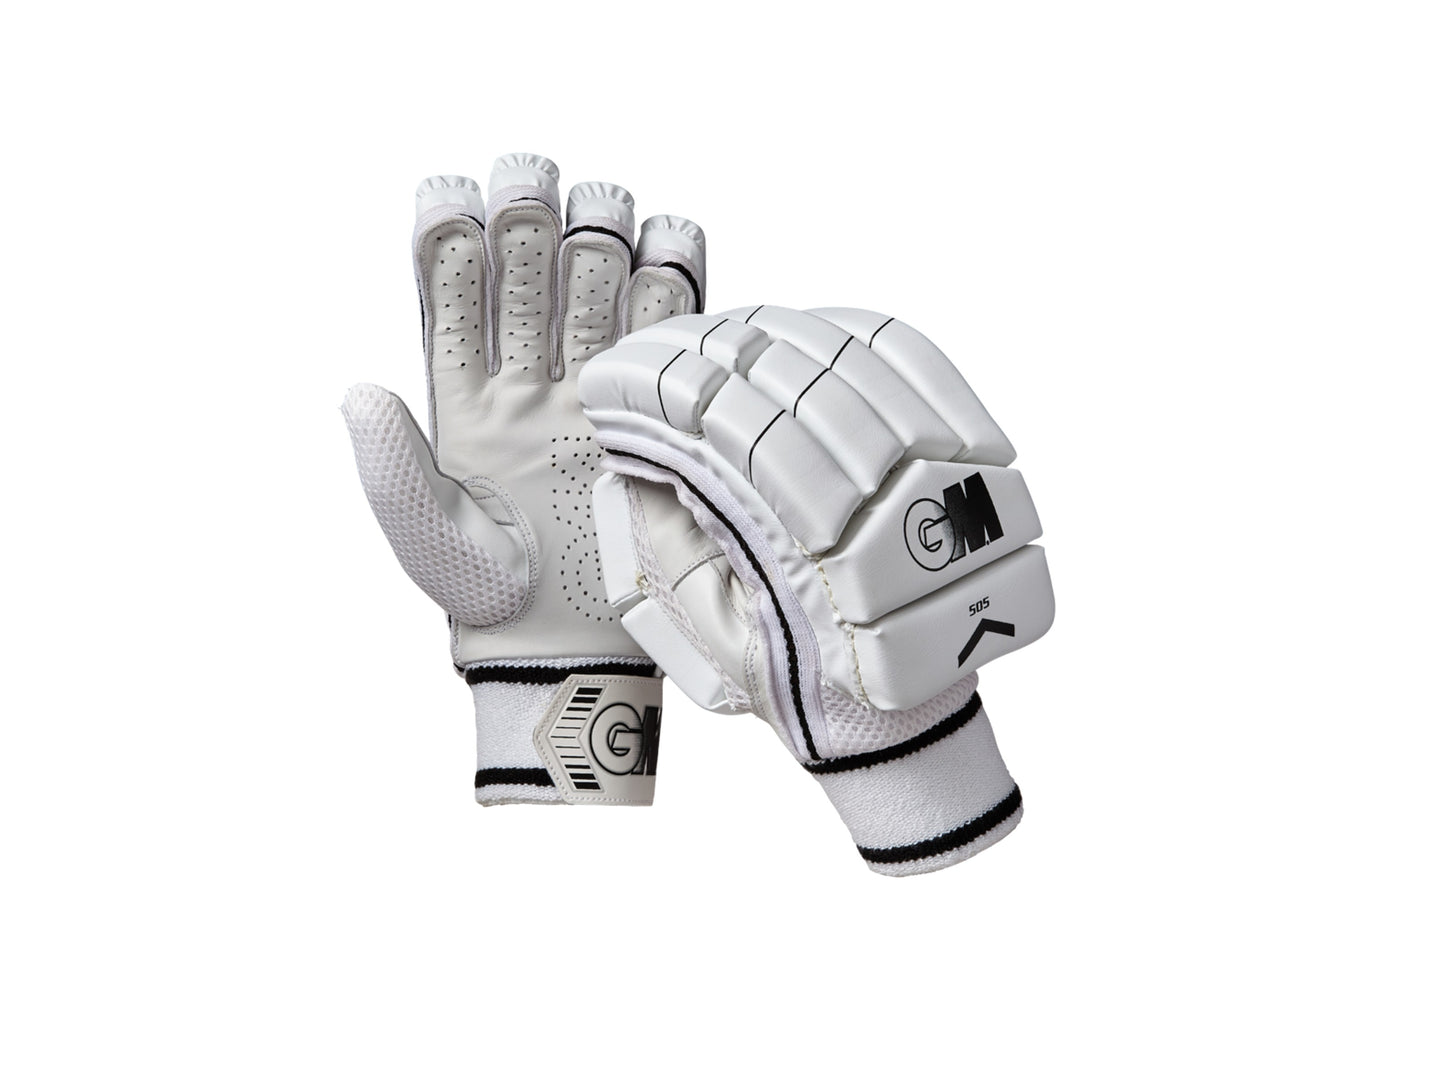 GM 505 Batting Gloves